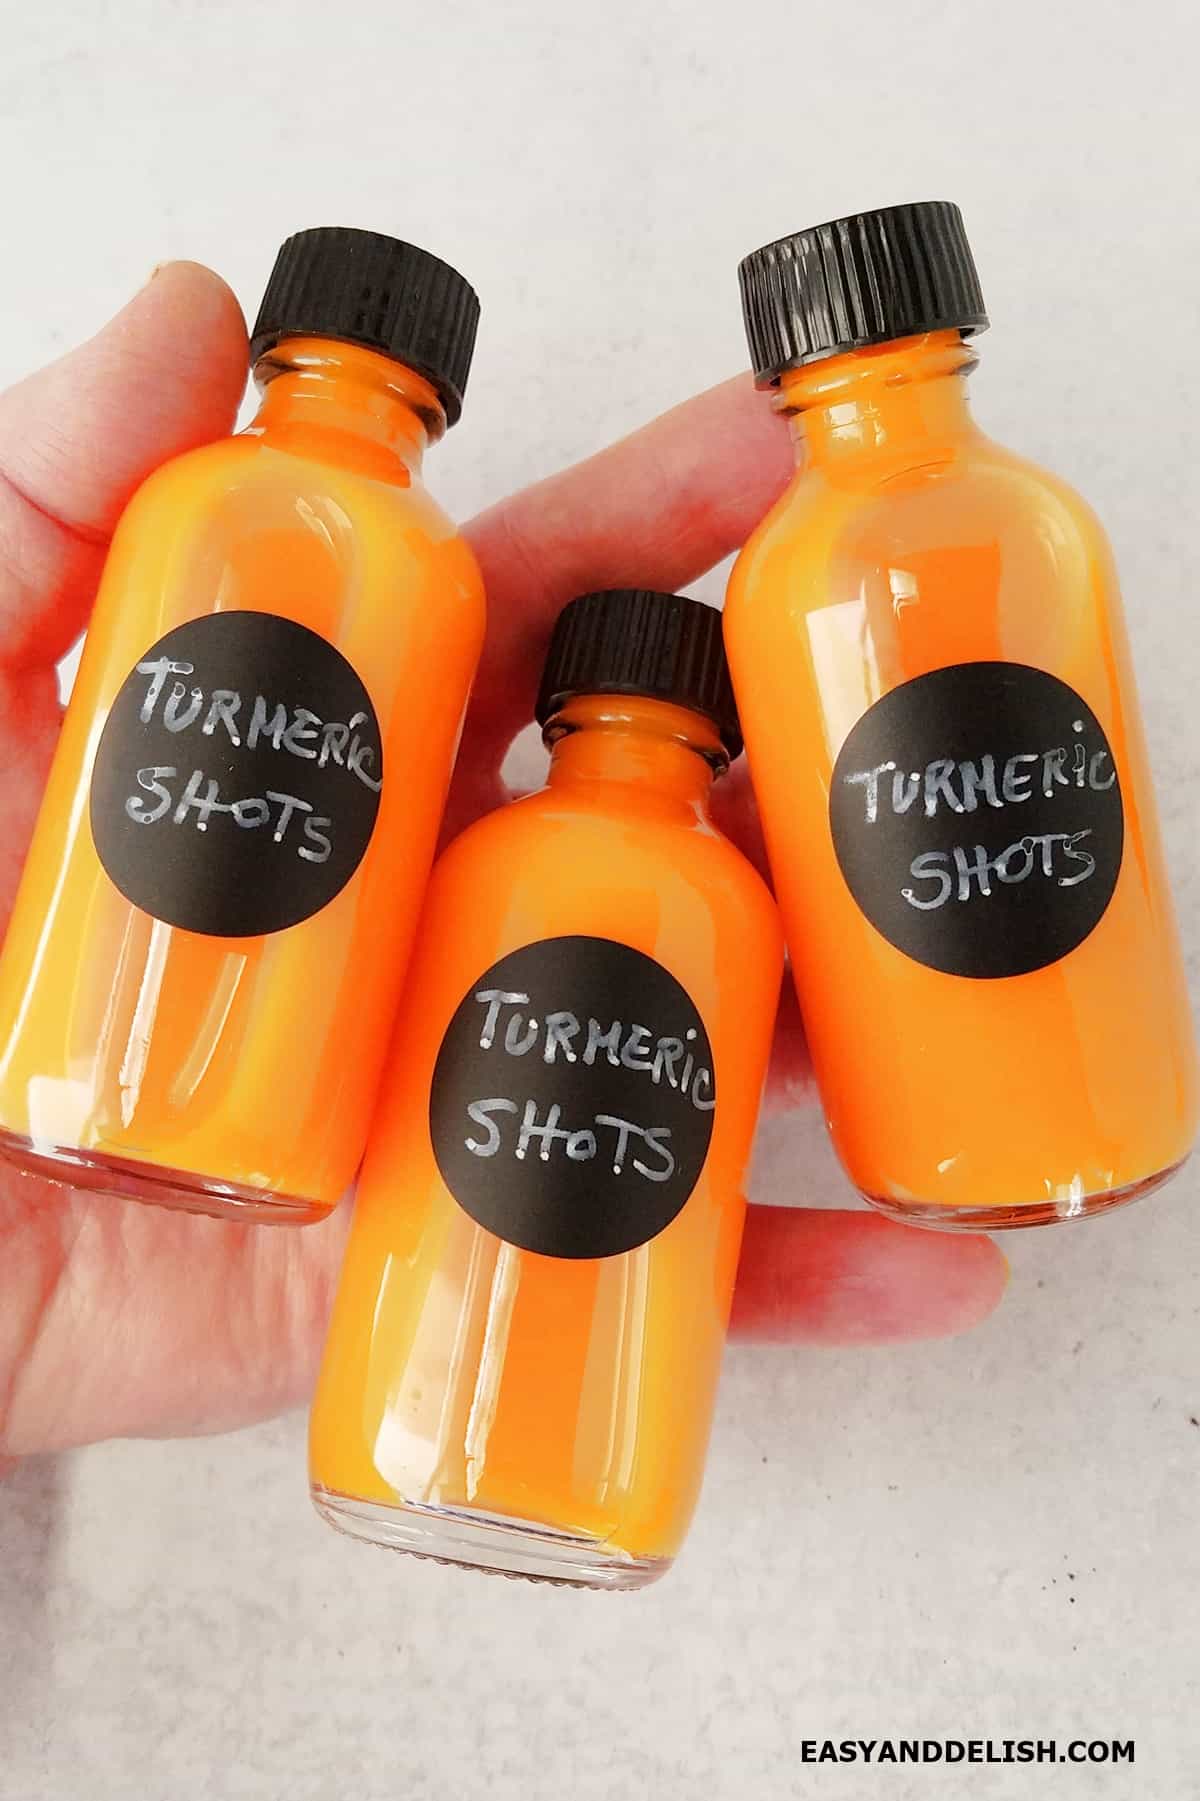 A hand holding flat three bottles of turmeric wellness shots.